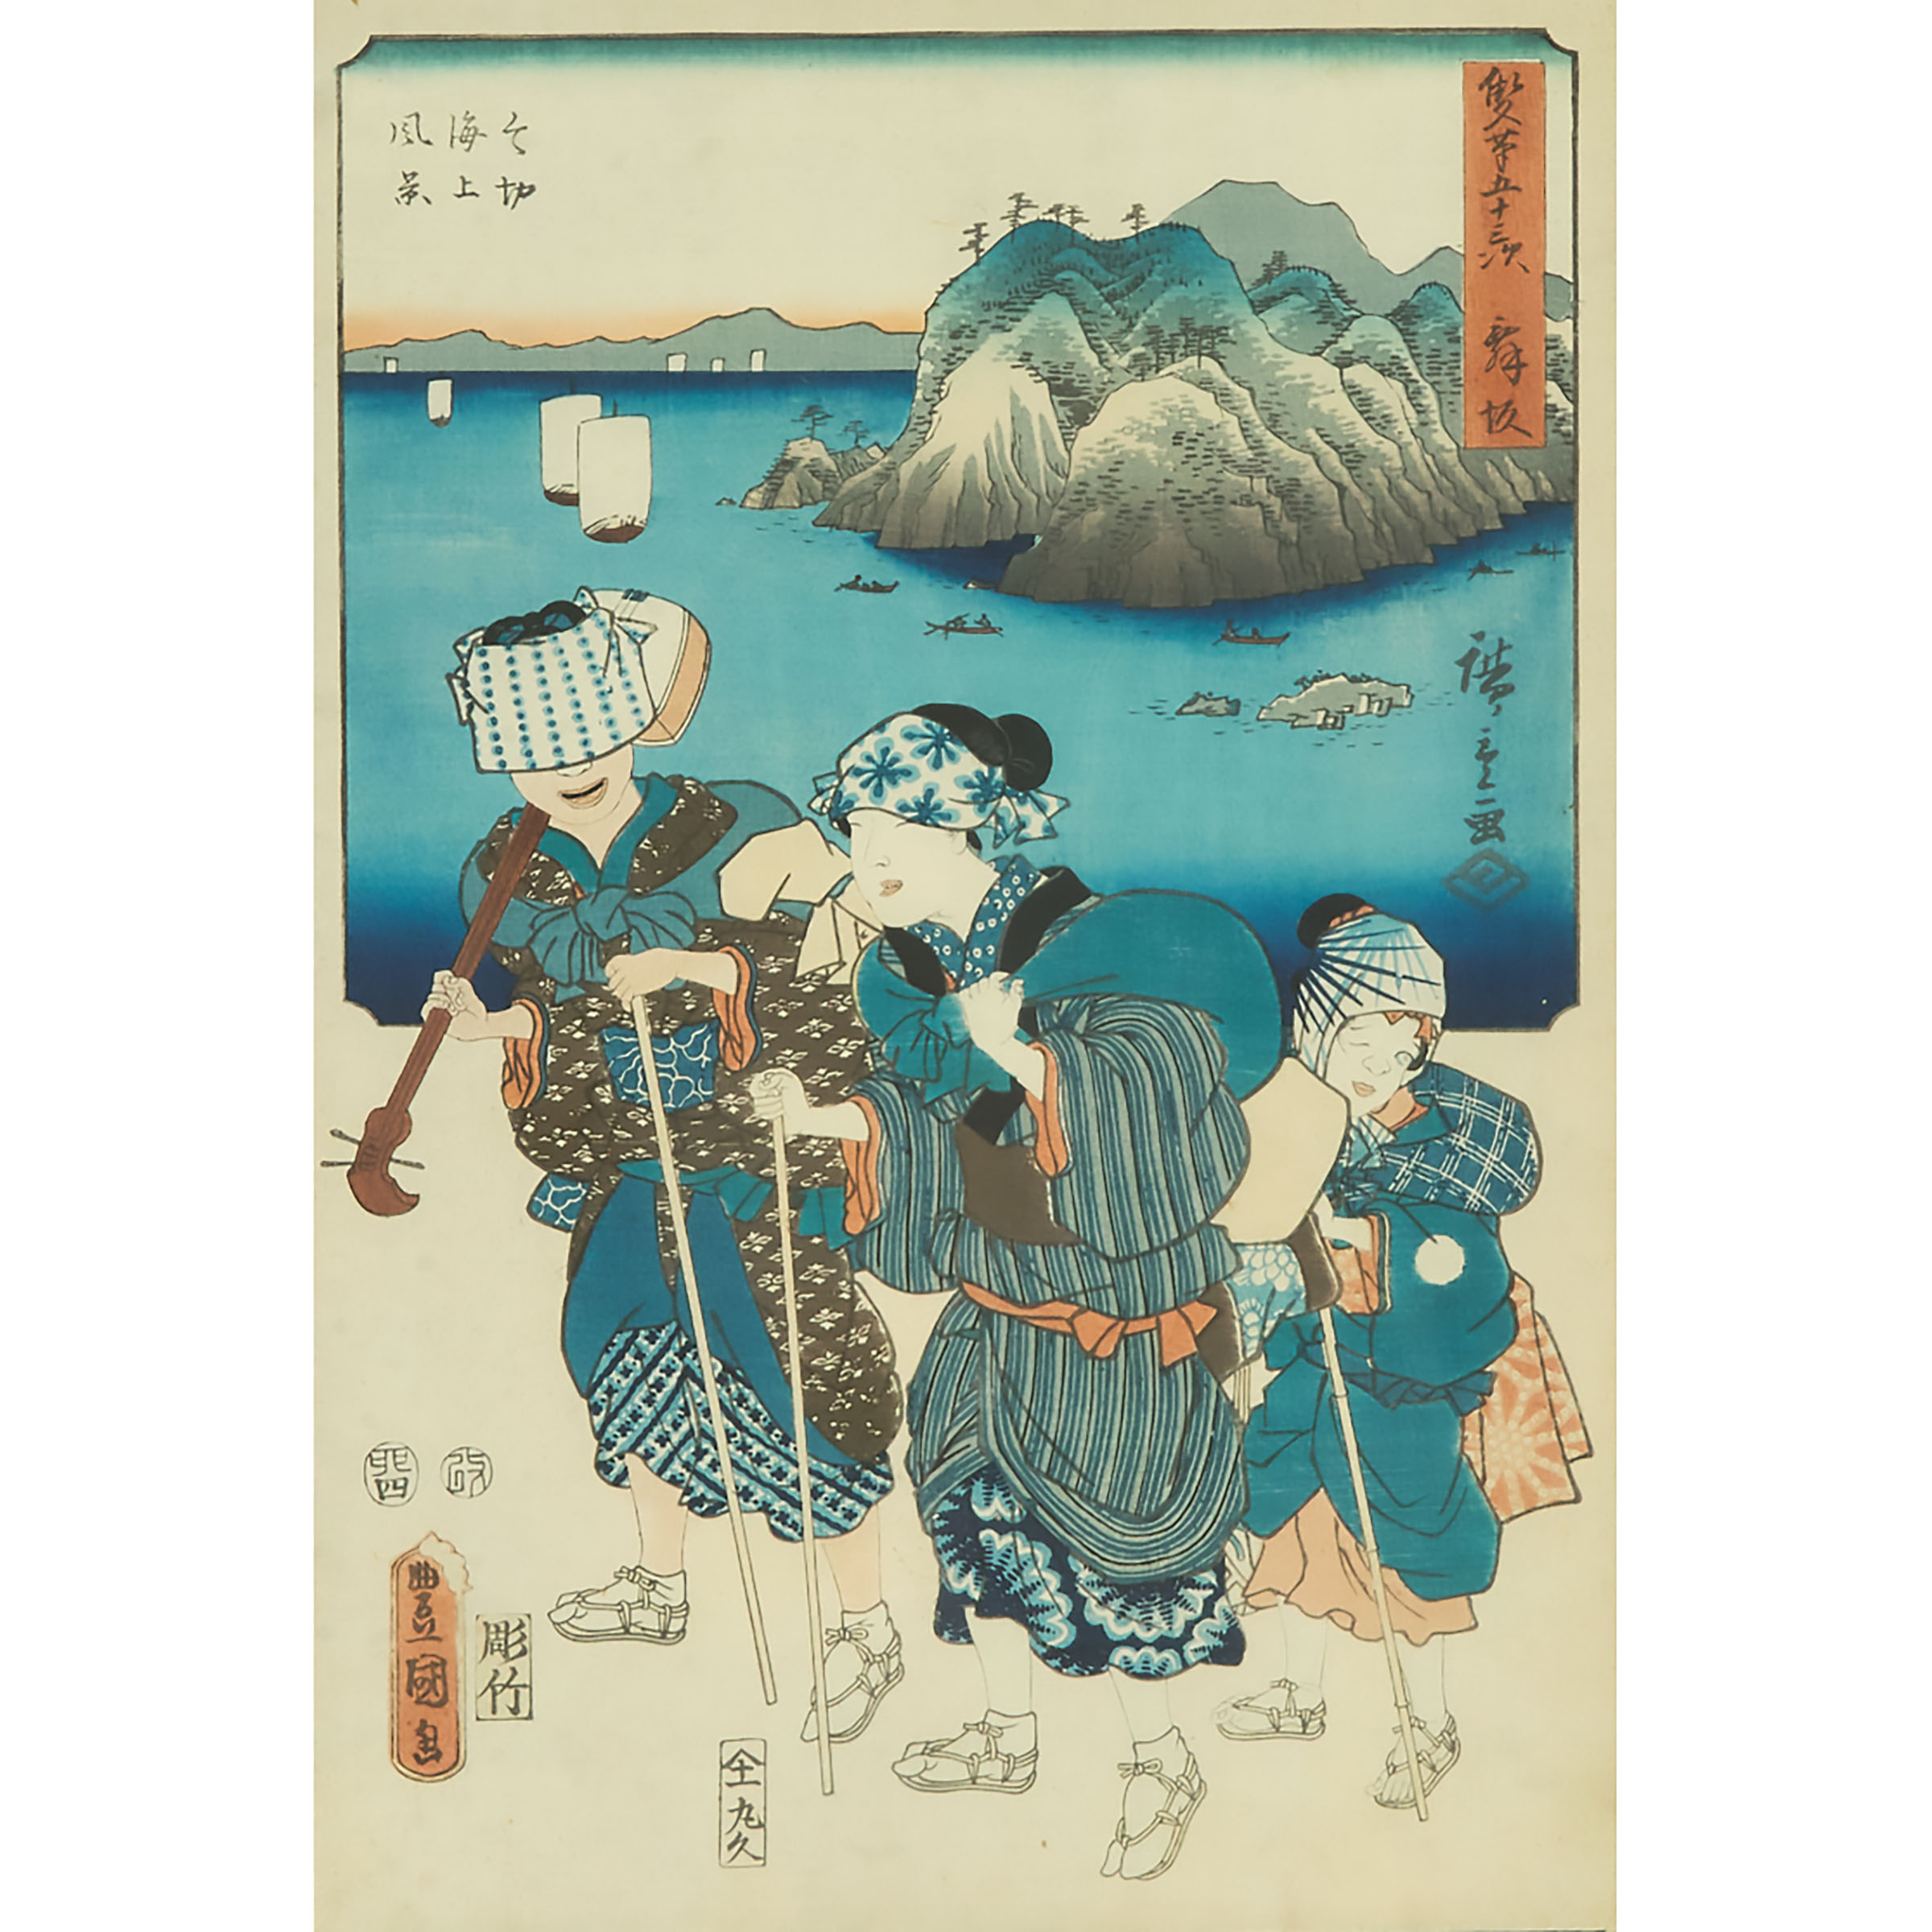 Utagawa Hiroshige (1979-1858) and Utagawa Kunisada (Toyokuni III, 1786-1865), Biwa-Hoshi Near Maisaka, Circa 1854-1857